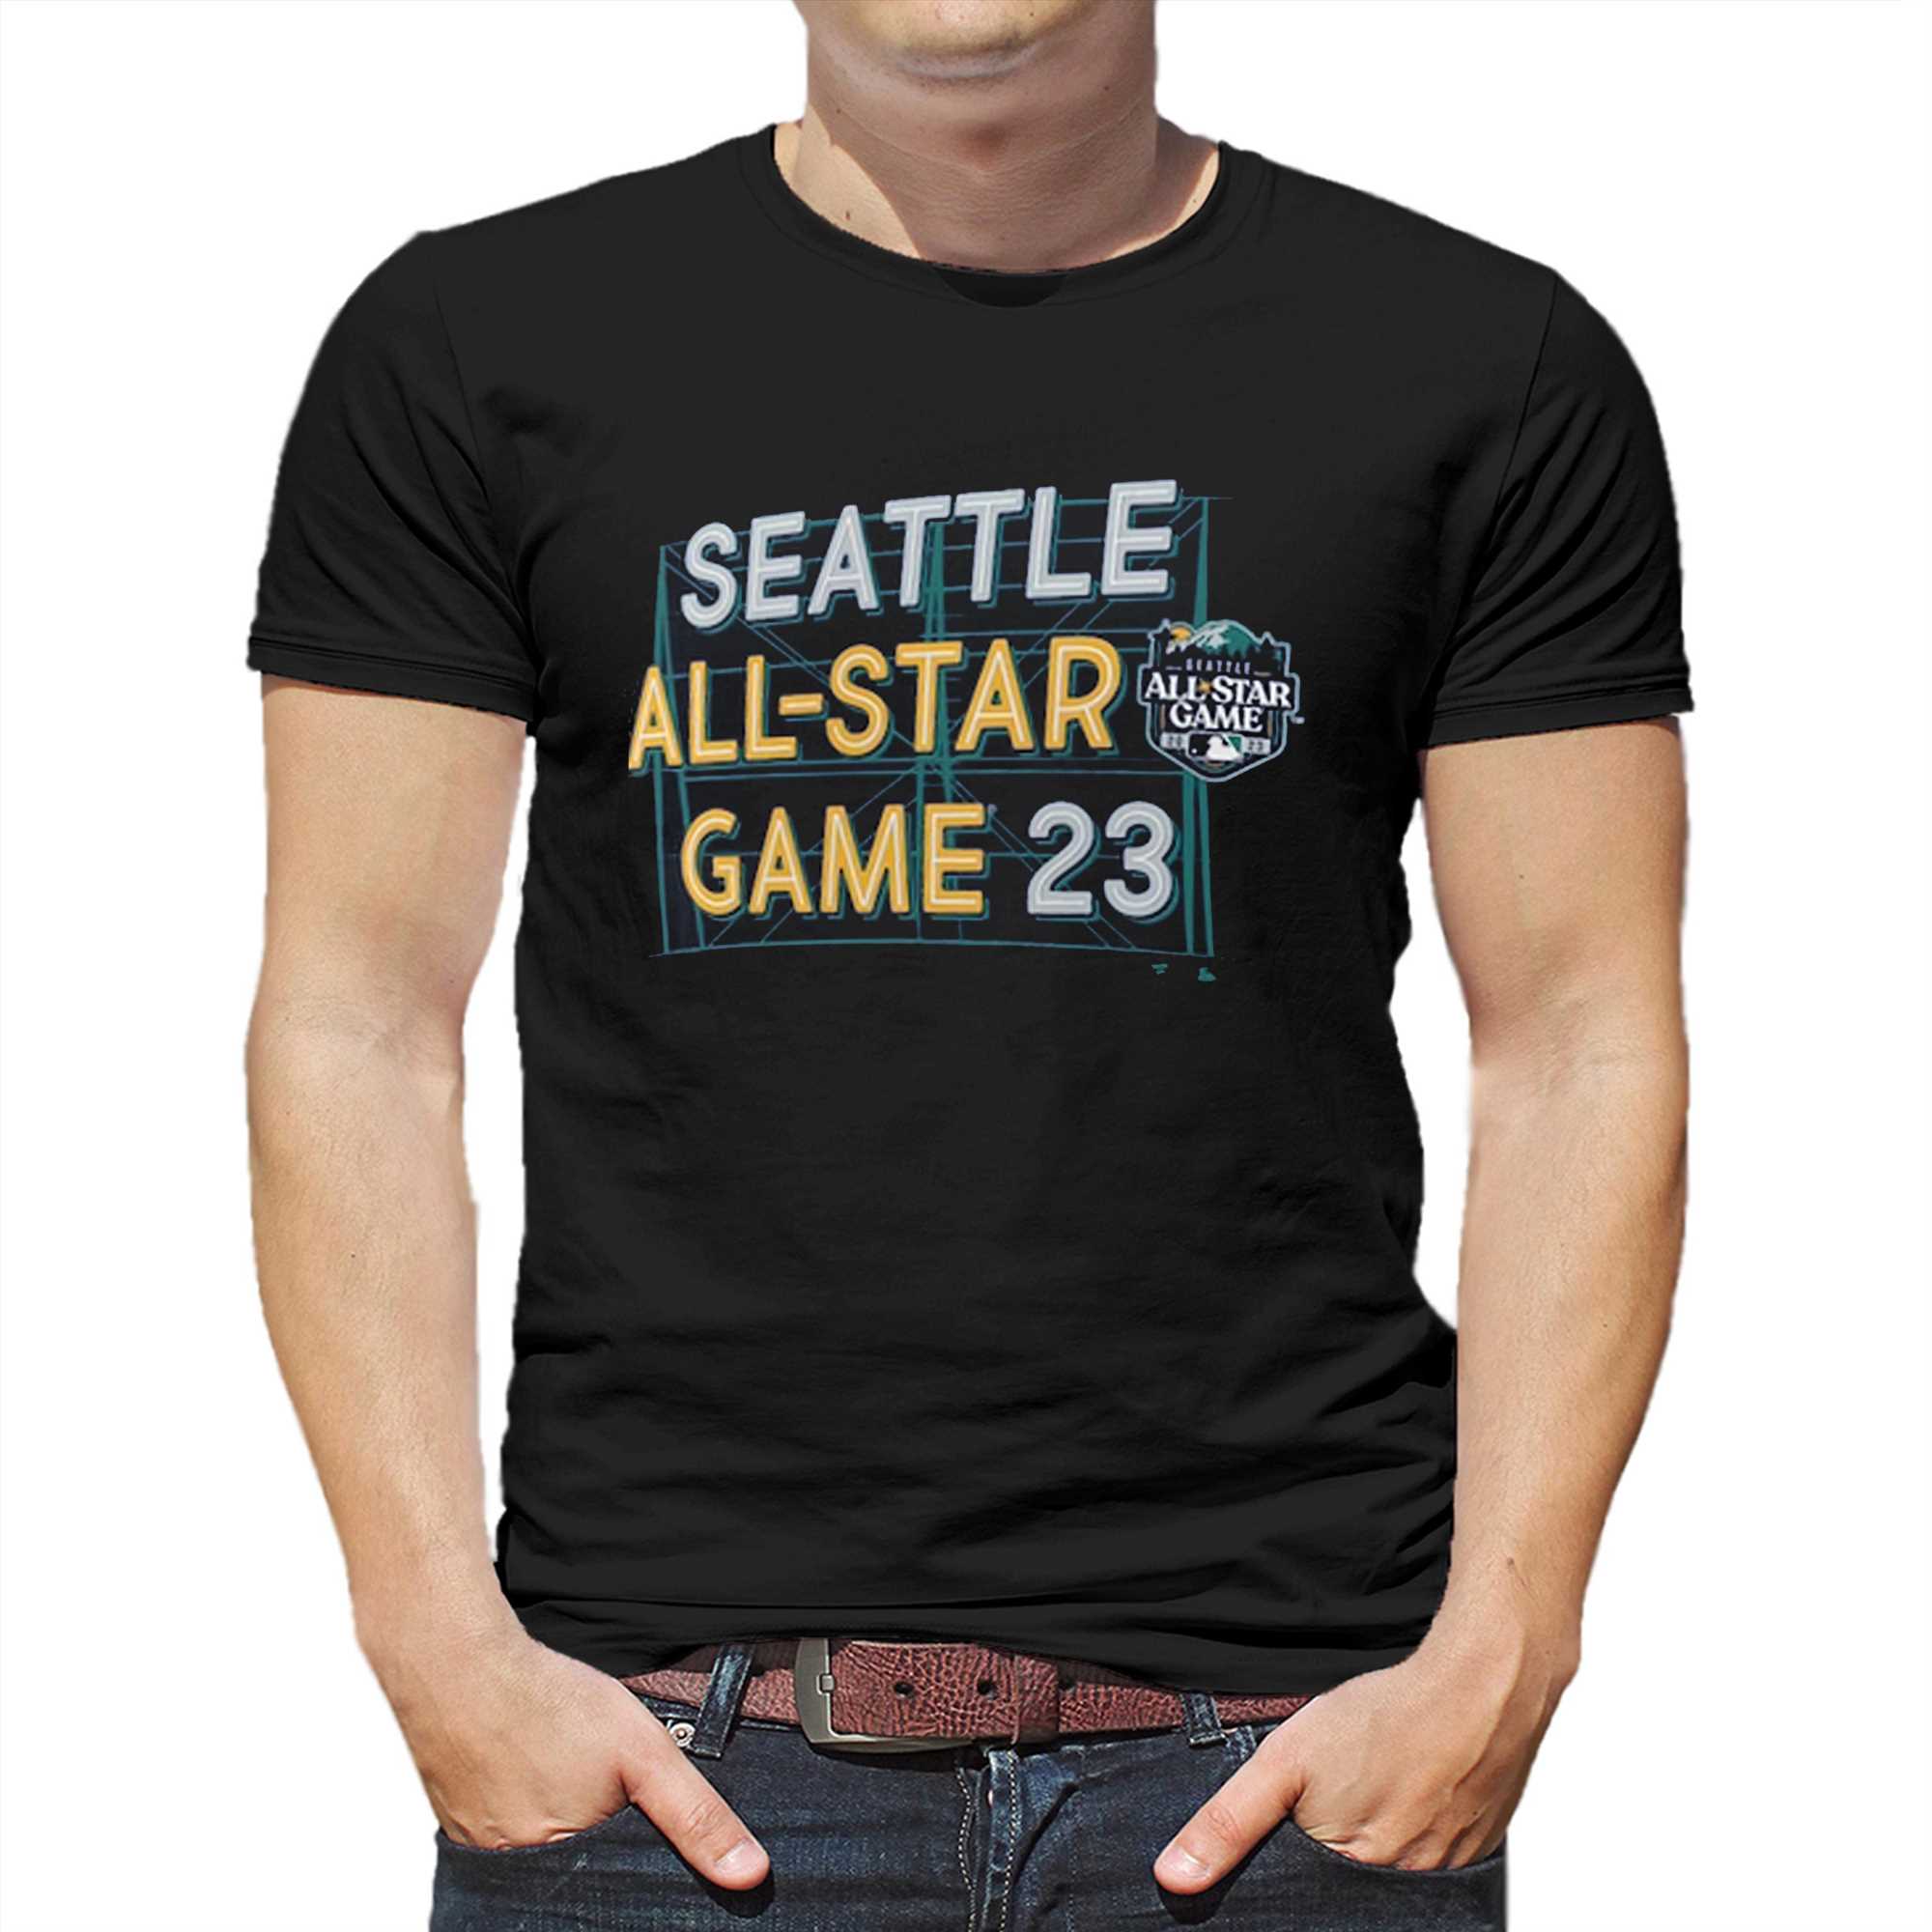 mlb all star game 2022 shirts